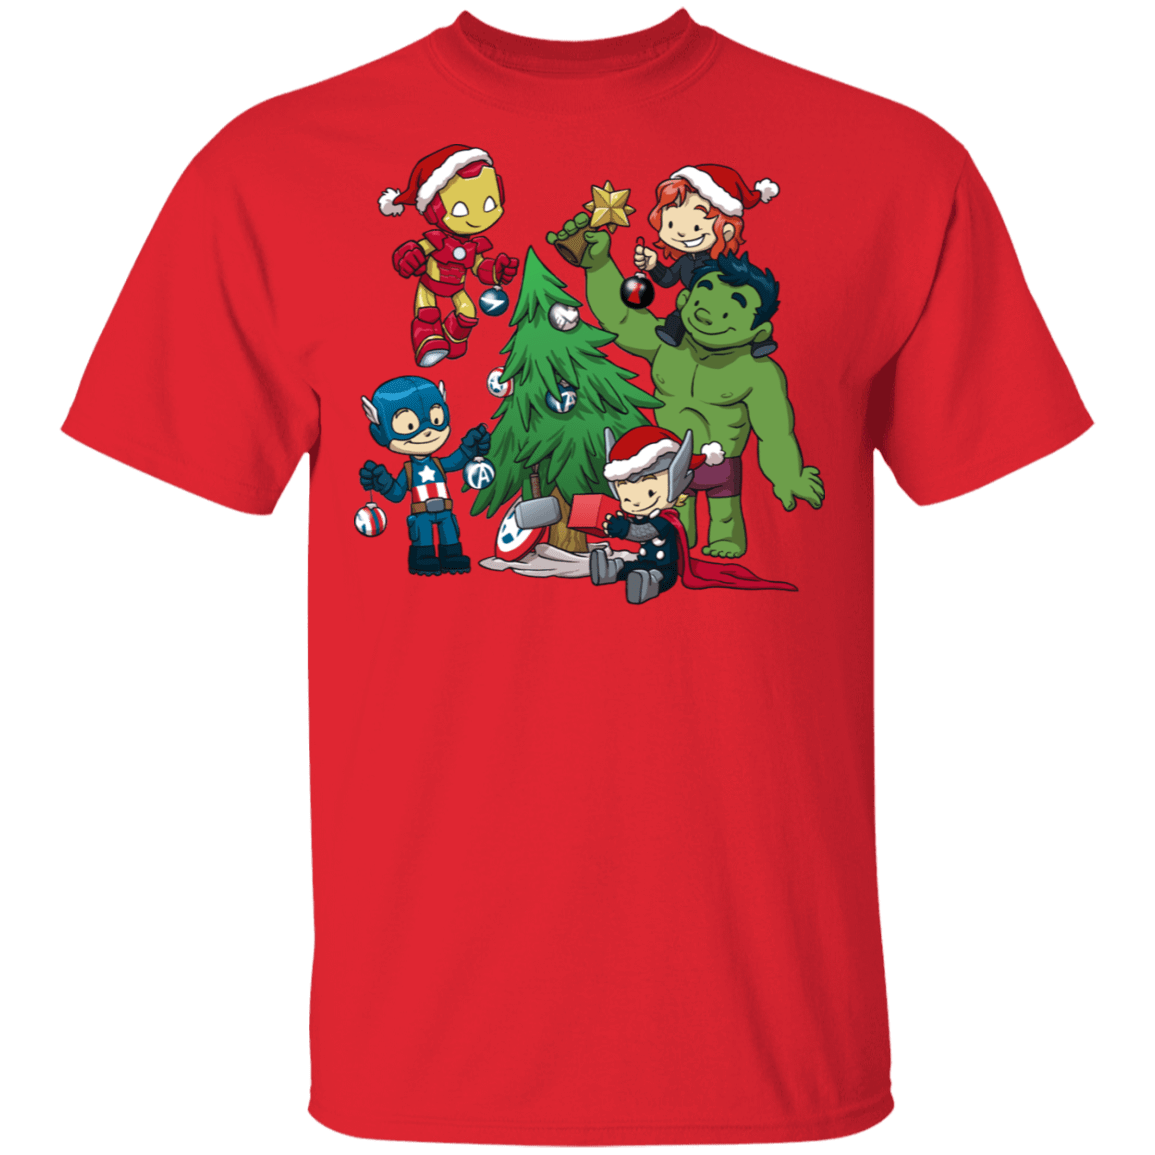 T-Shirts Red / S Avenger Tree T-Shirt